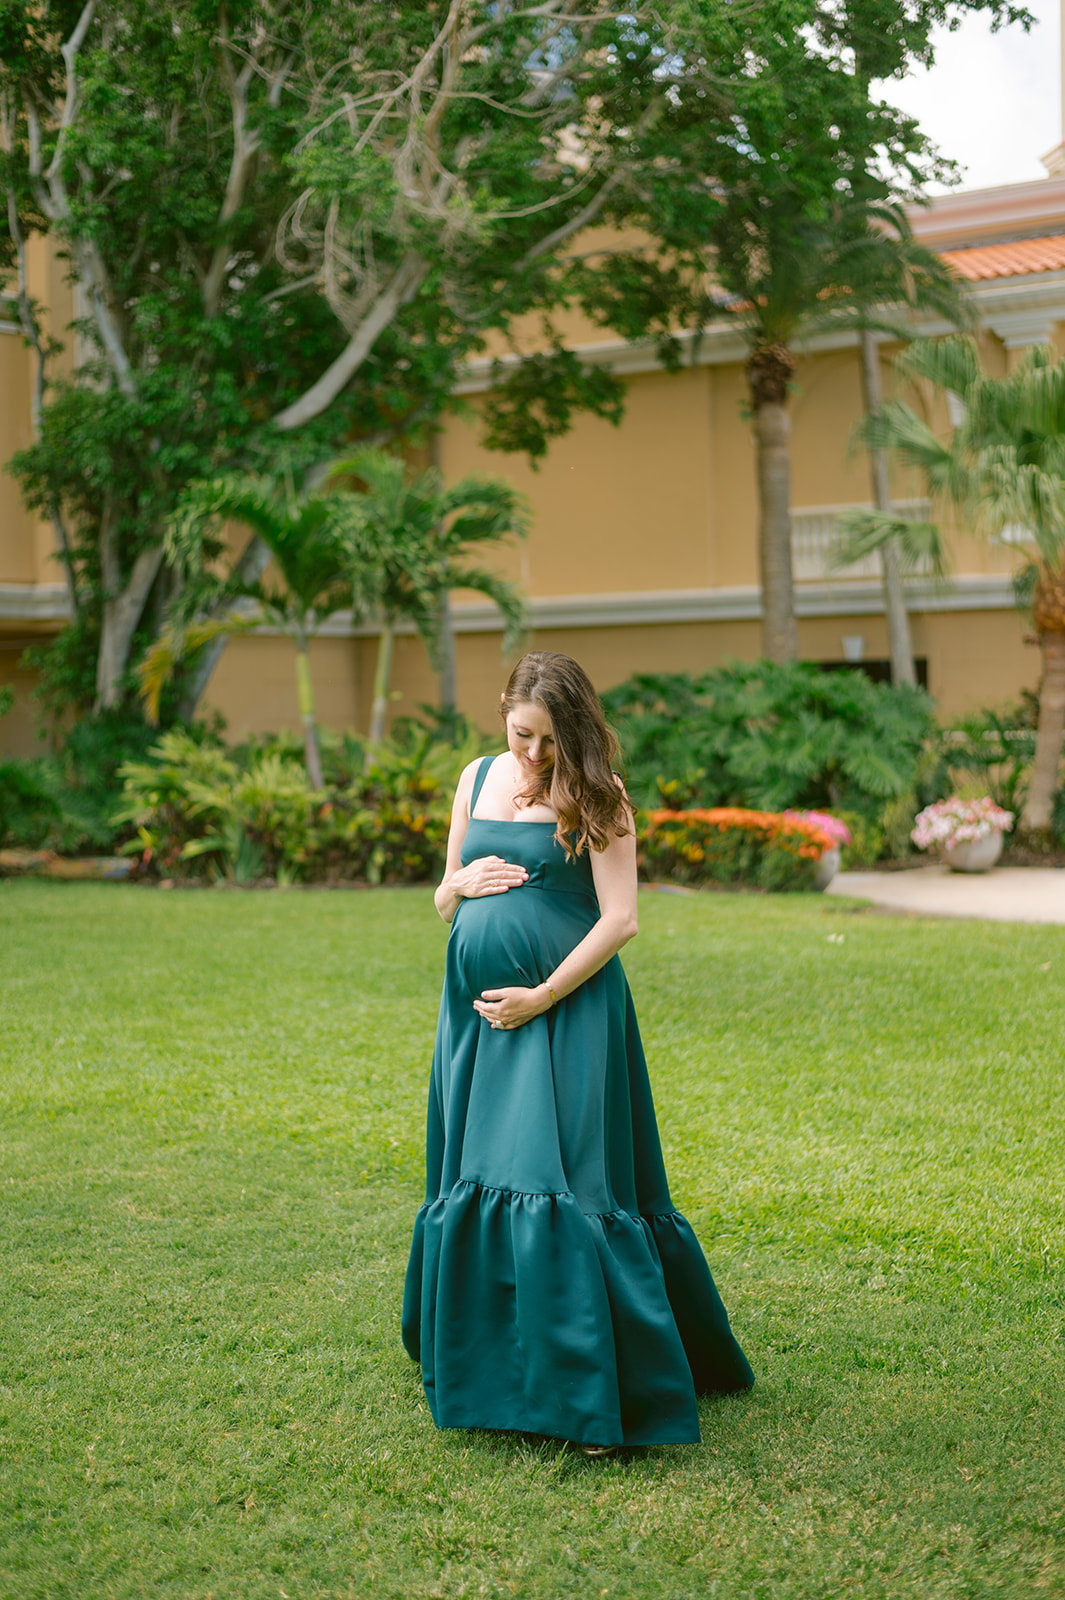 Gorgeous Amanda showcasing her baby bump in her custom green dress